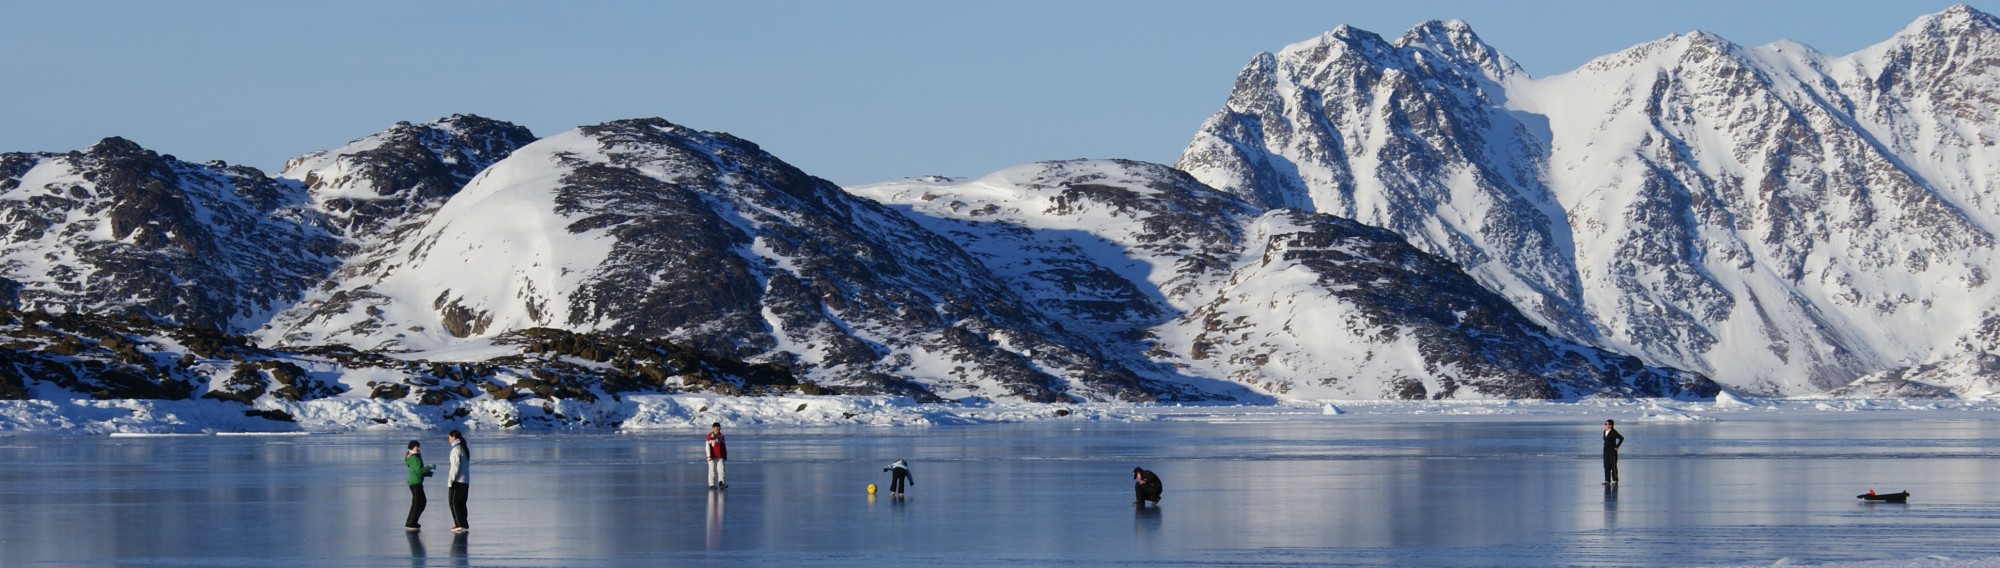 Kulusuk-torssuut-tunoq-children-on-ice